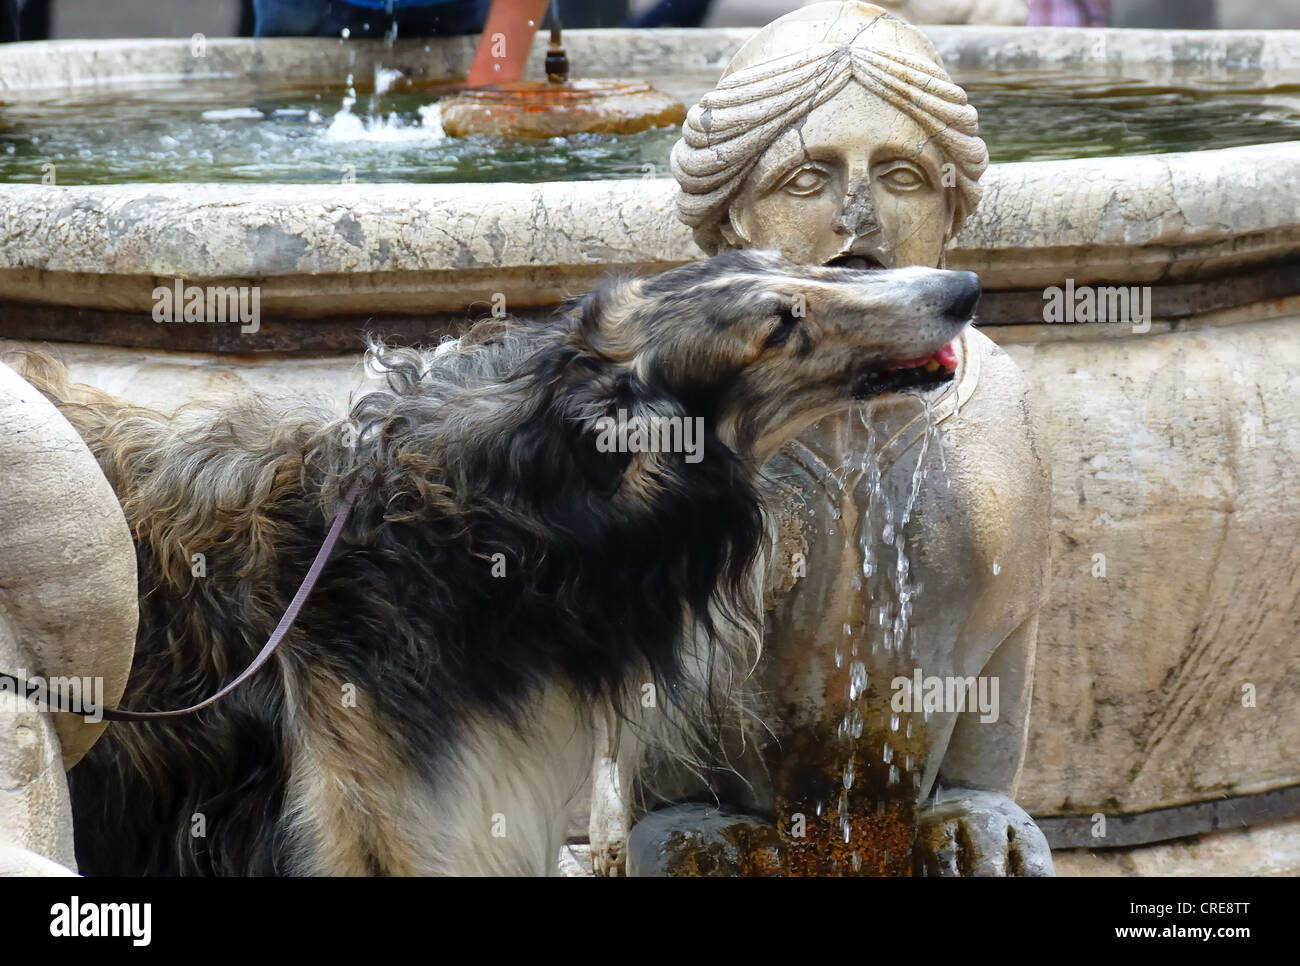 Bergamo, Italy : Contarini fountain, Piazza Vecchia, Upper Town. A dog (Russian Wolfhound - Borzoi) drinking from the fountain. Stock Photo